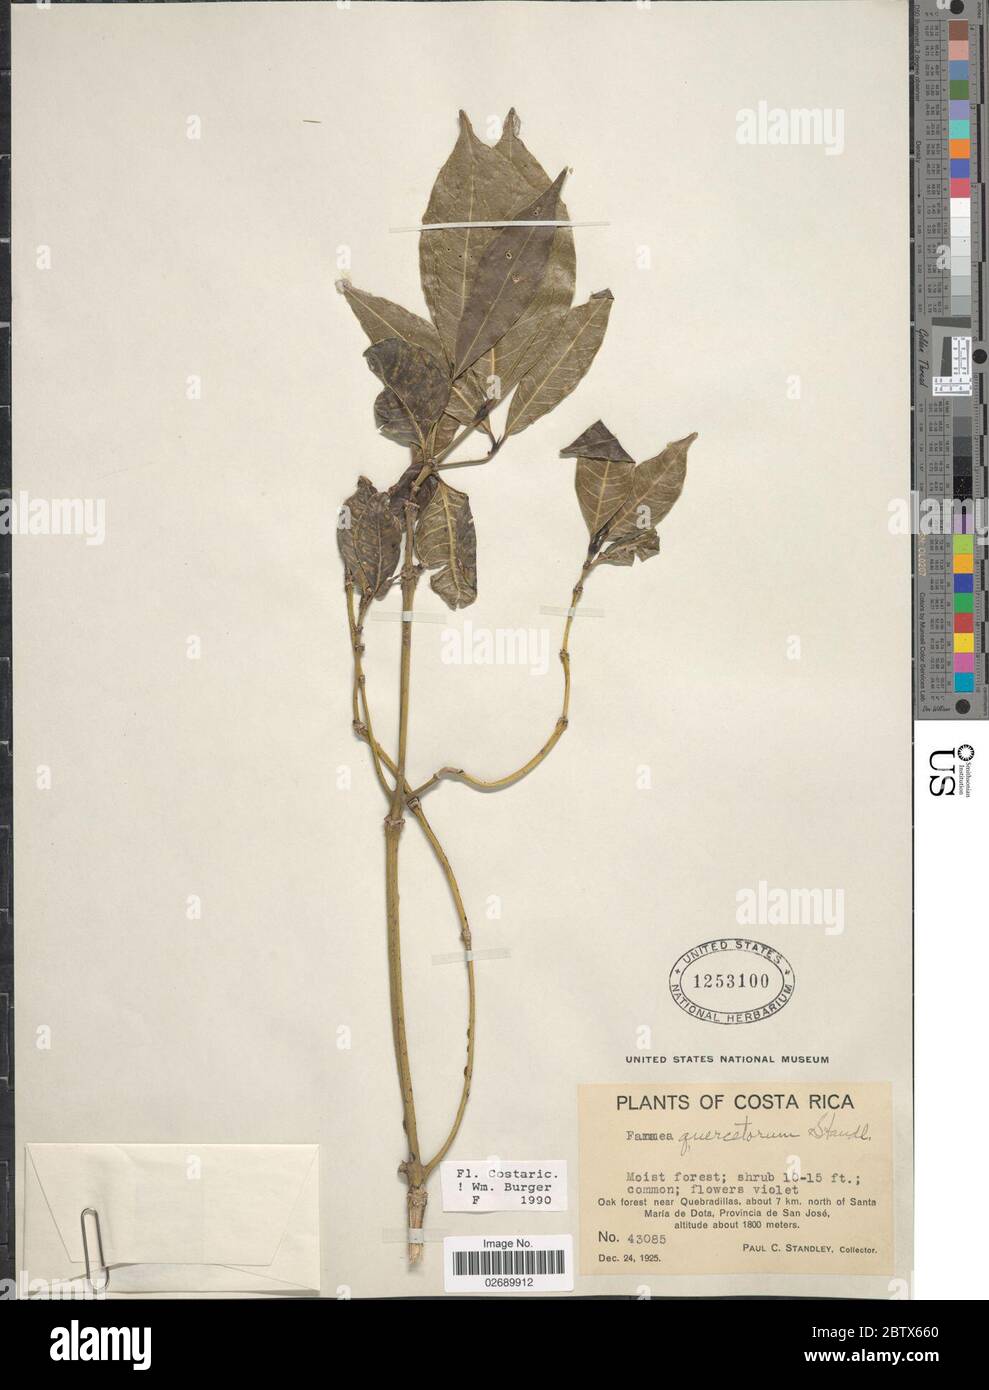 Faramea quercetorum Standl. Stock Photo